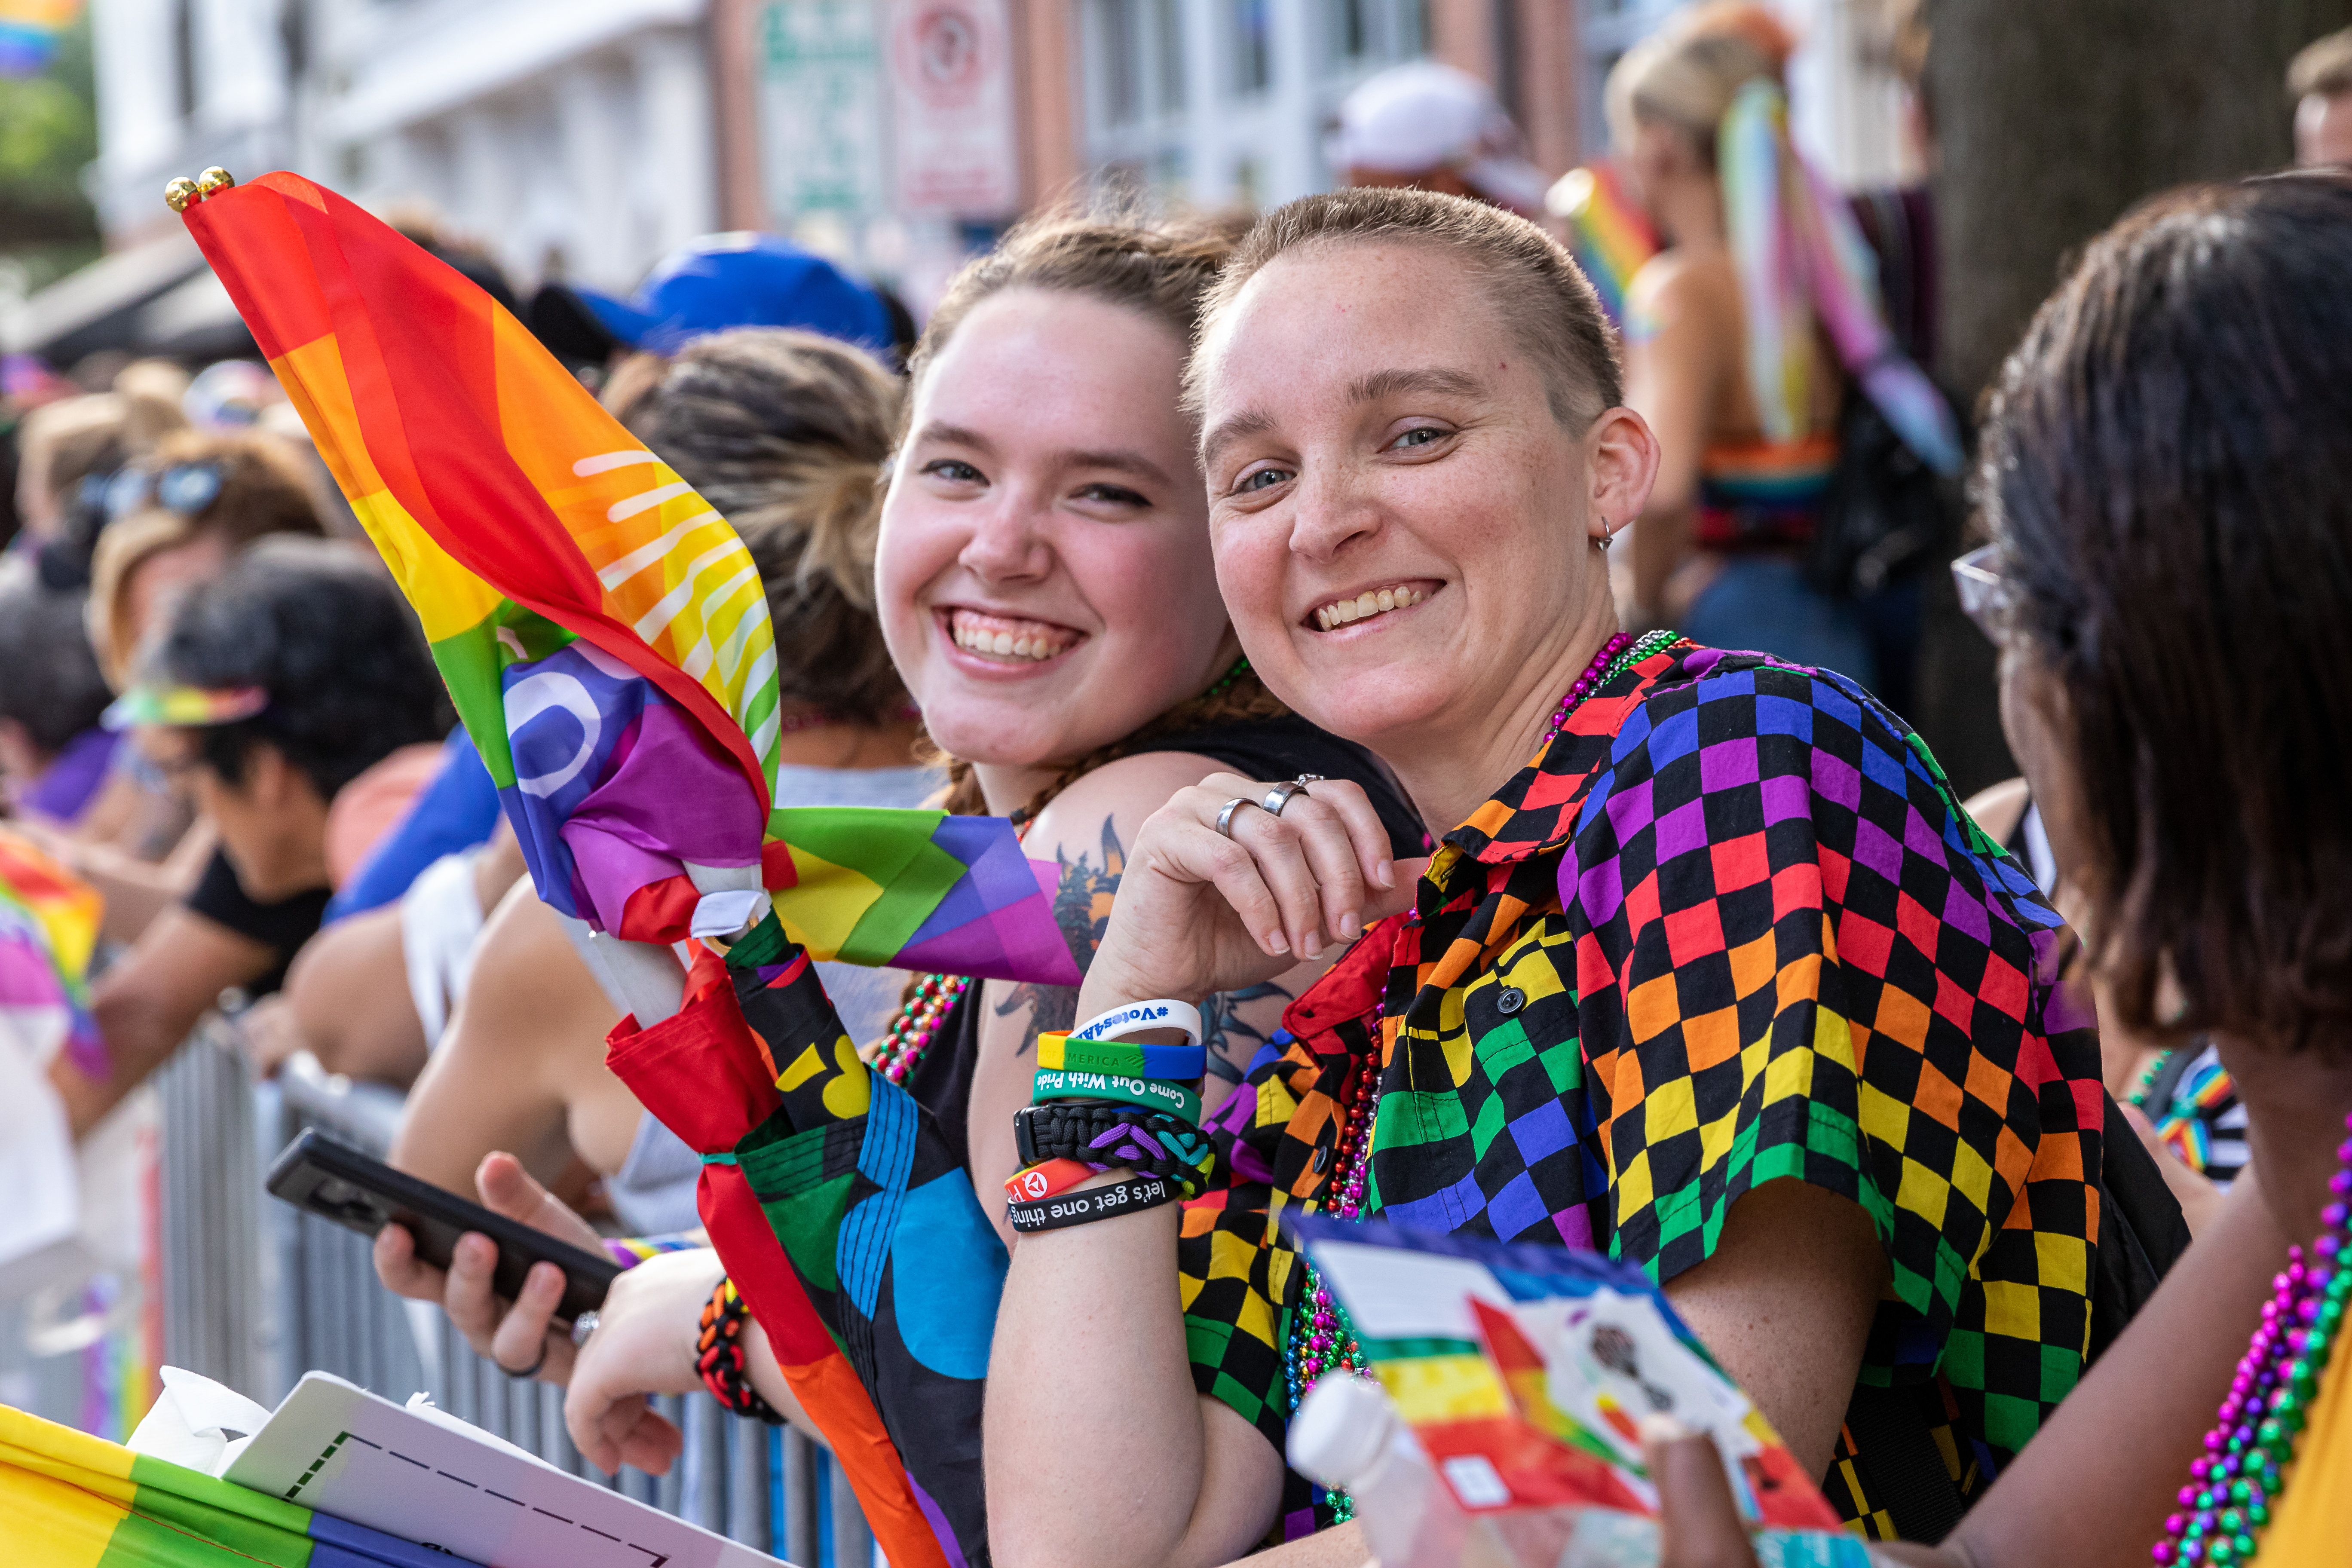 Orlando Pride festival and parade return with COVID precautions